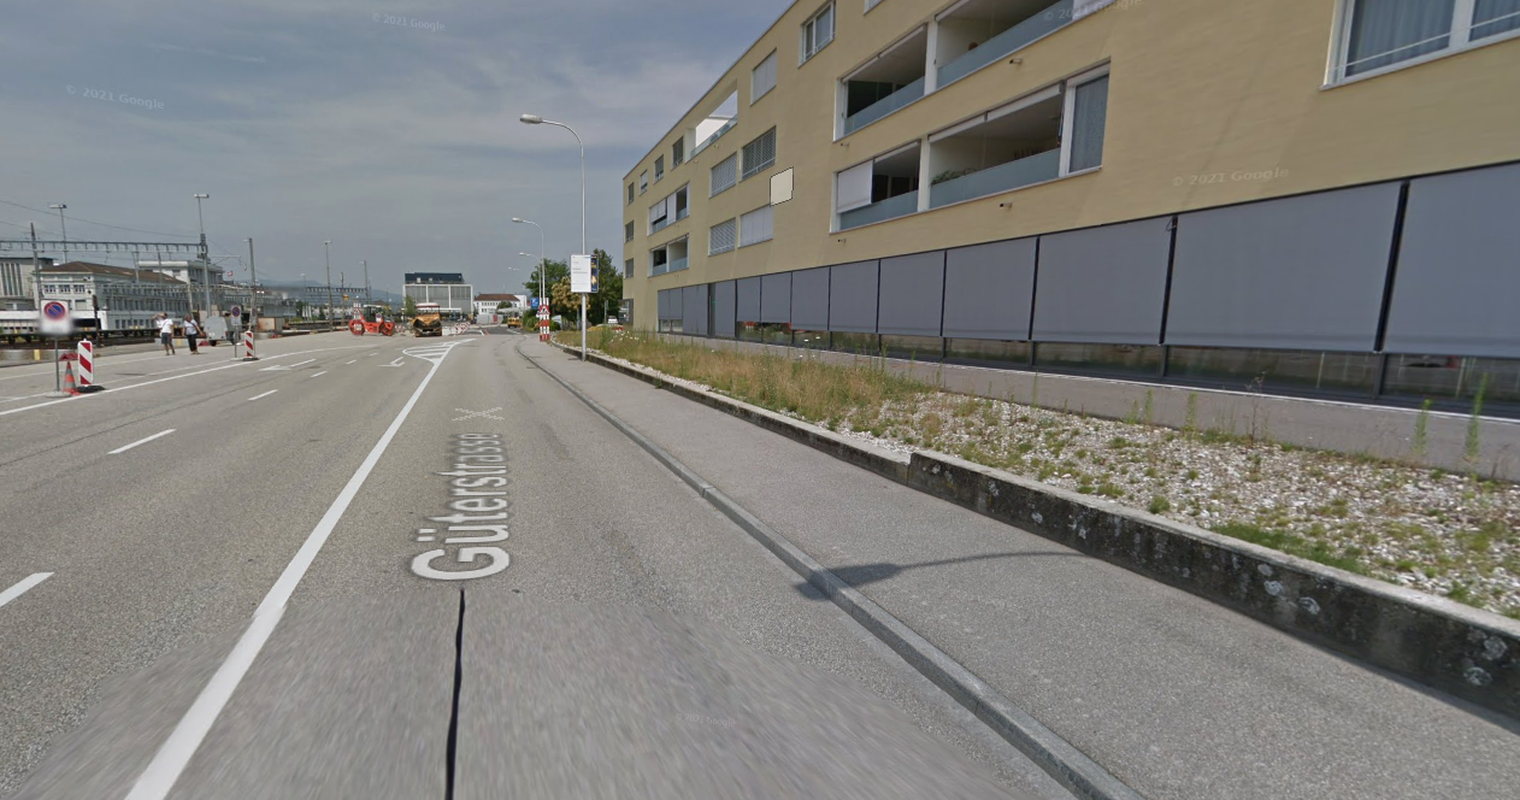 An Grenze zu Luzern: Mann verletzt mehrere Passanten